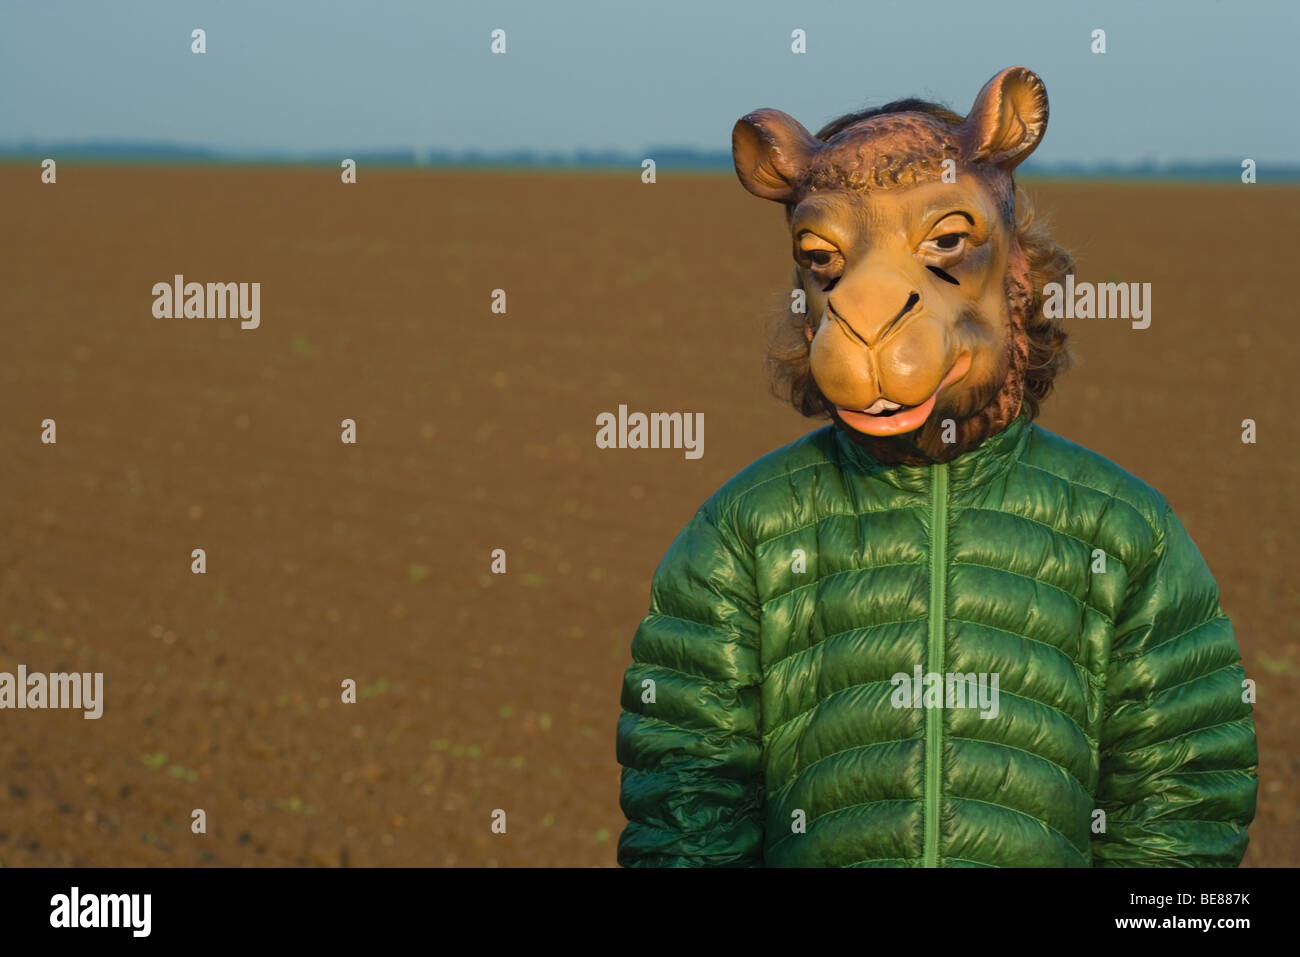 Person im Feld stehen, Kamel Maske trägt Stockfotografie - Alamy